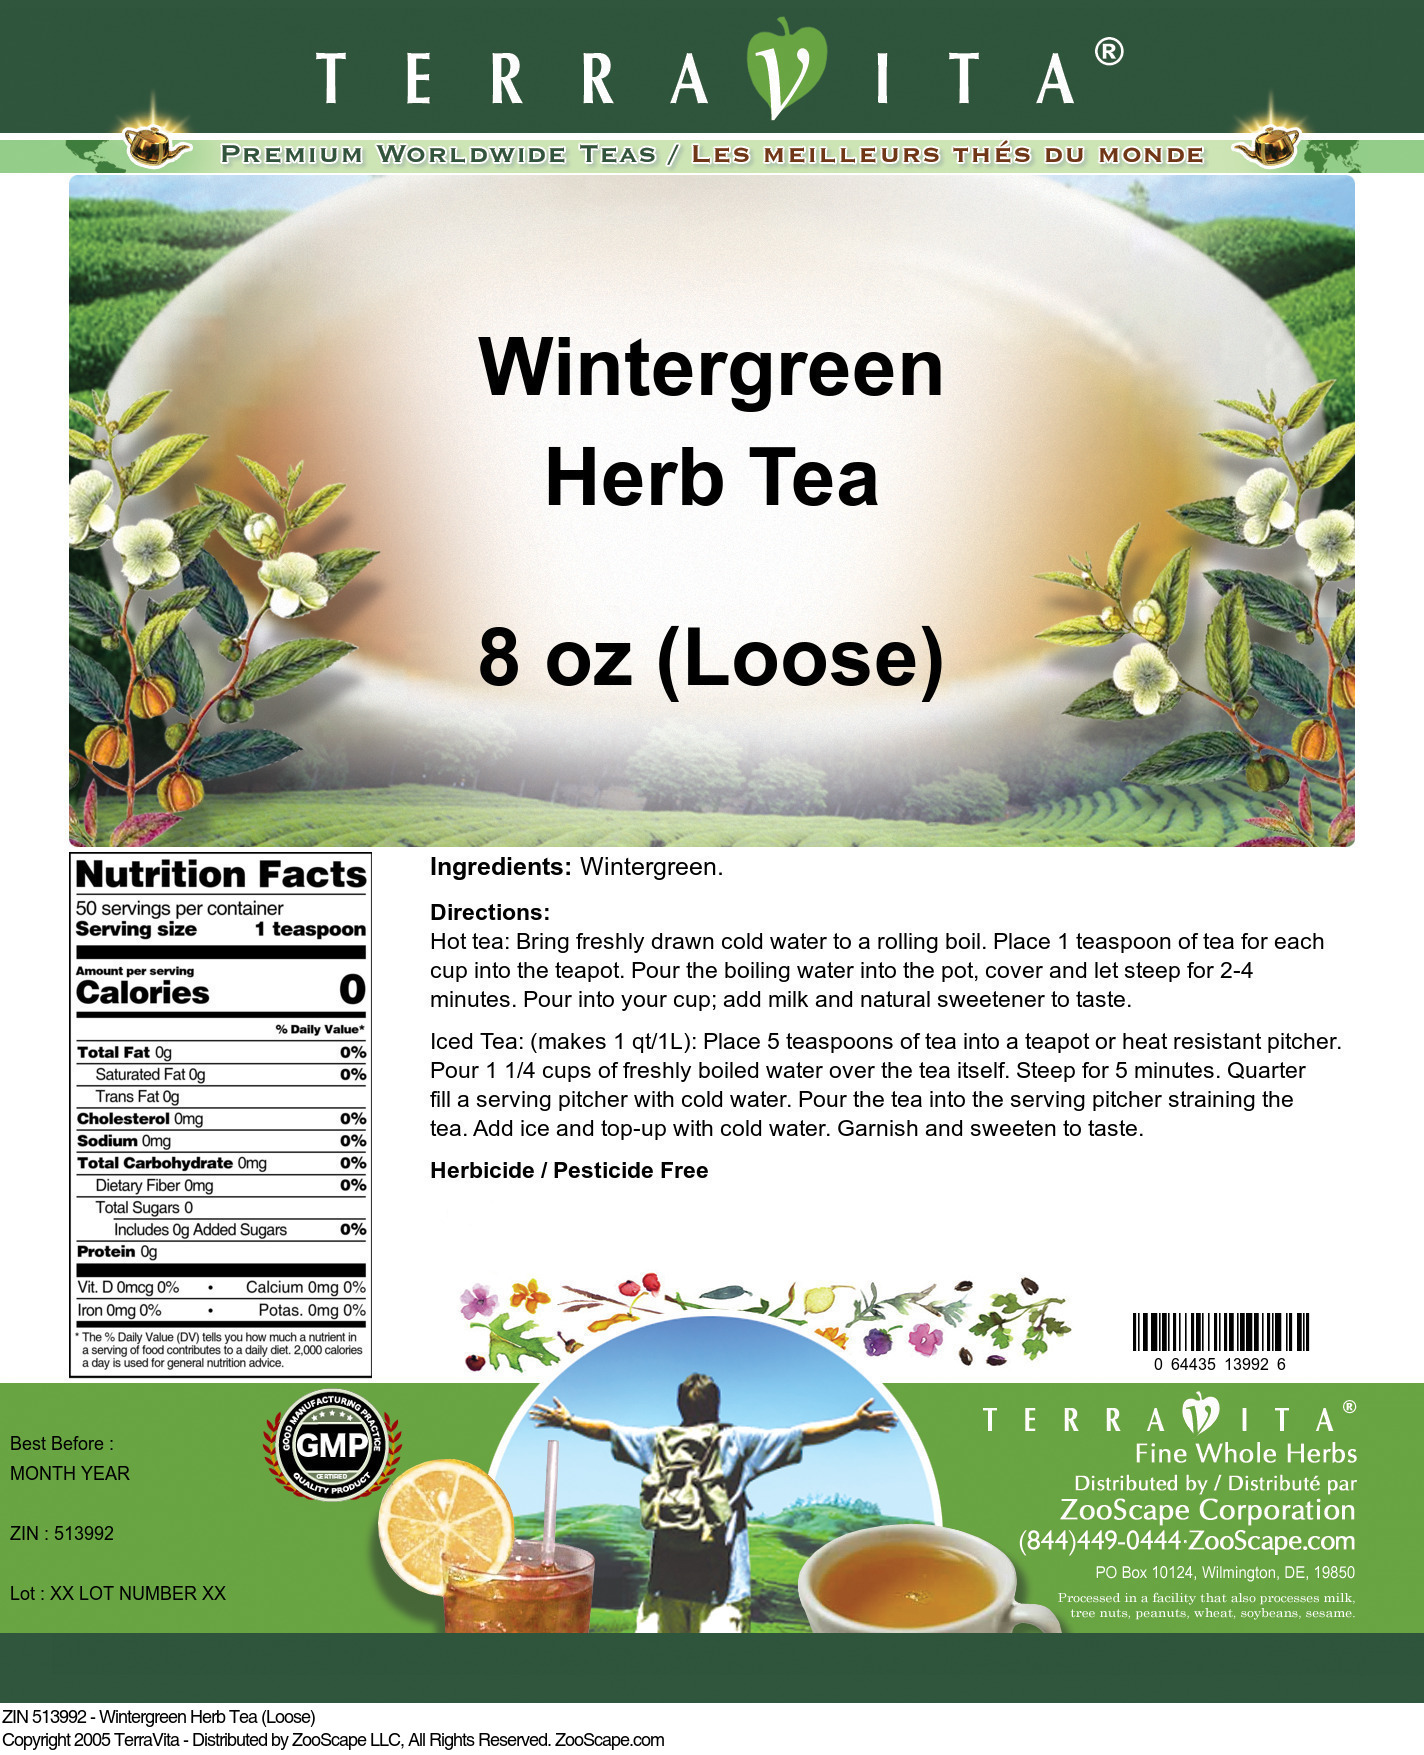 Wintergreen Herb Tea (Loose) - Label